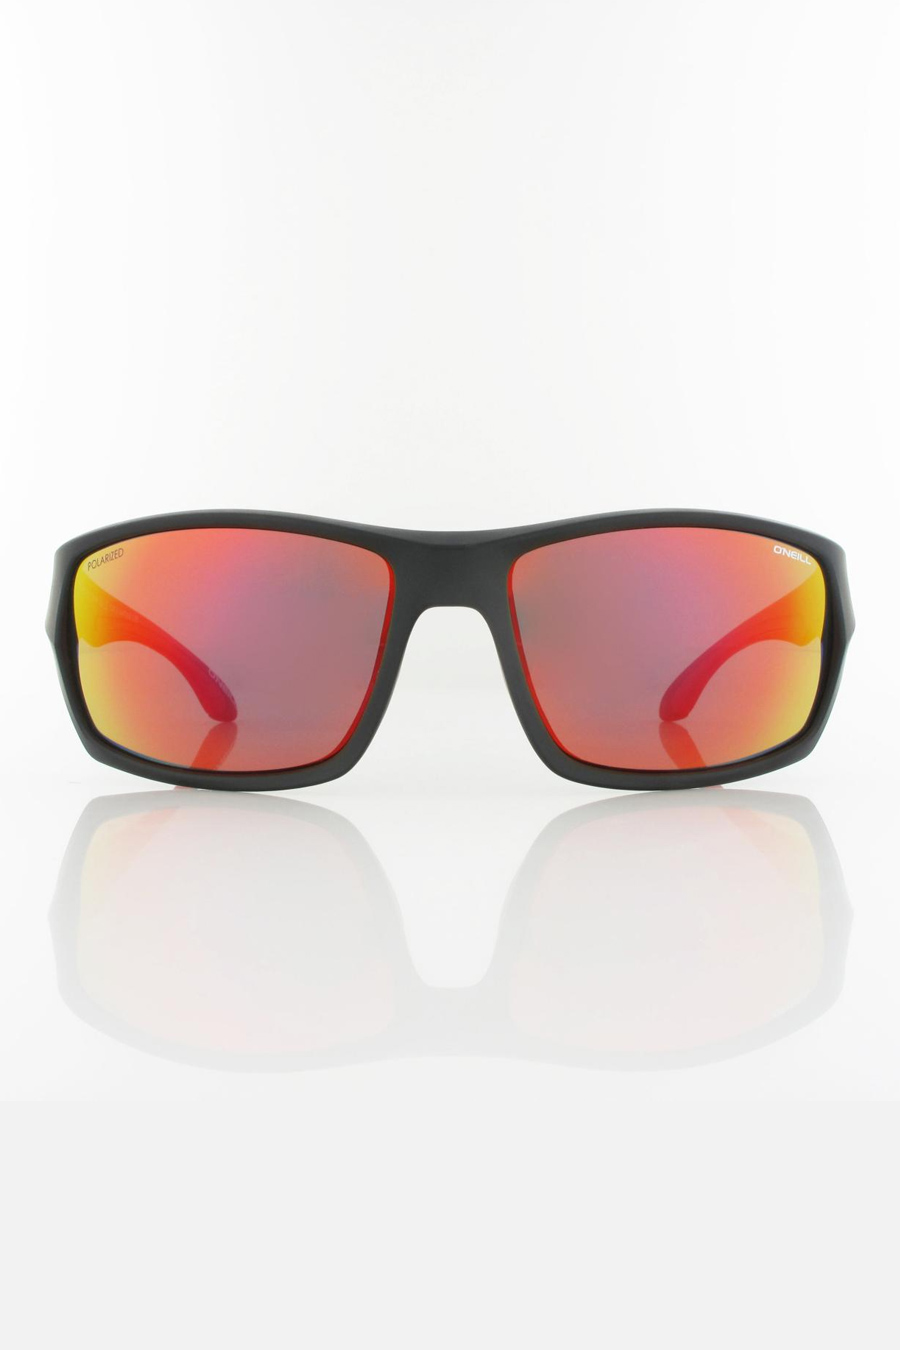 Солнечные очки ONEILL ONS-9020-20-104P